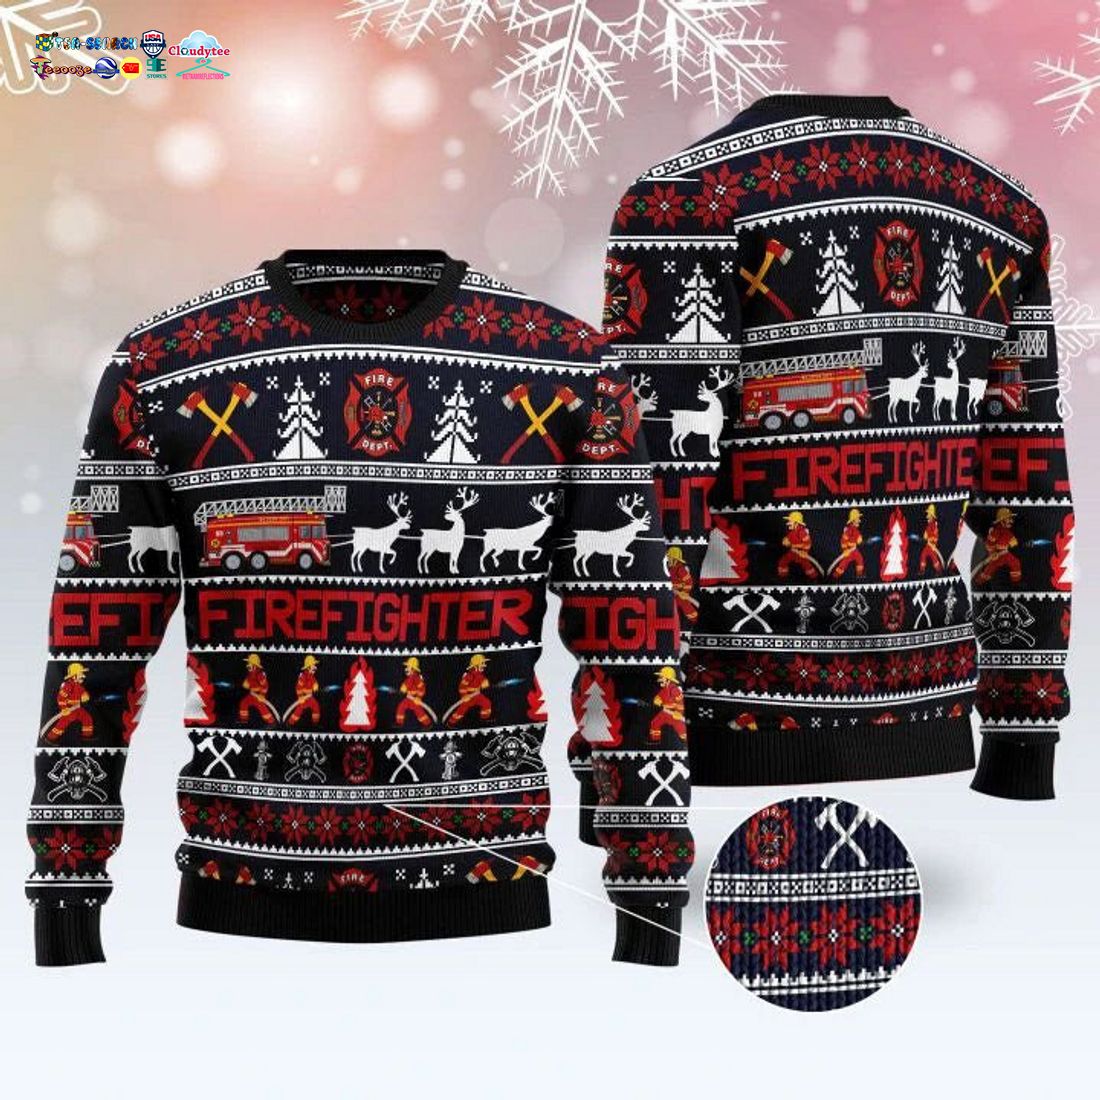 Firefighter Reindeer Ugly Christmas Sweater - Stunning